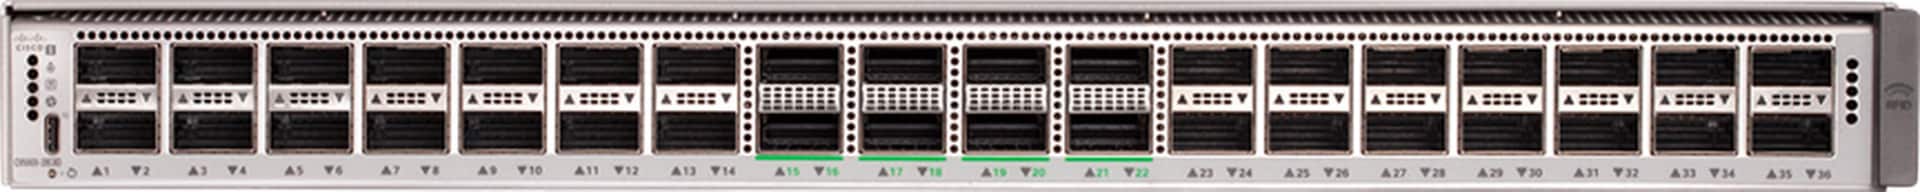 Cisco Catalyst C9500X-28C8D - Network Advantage - switch - 28 ports - manag